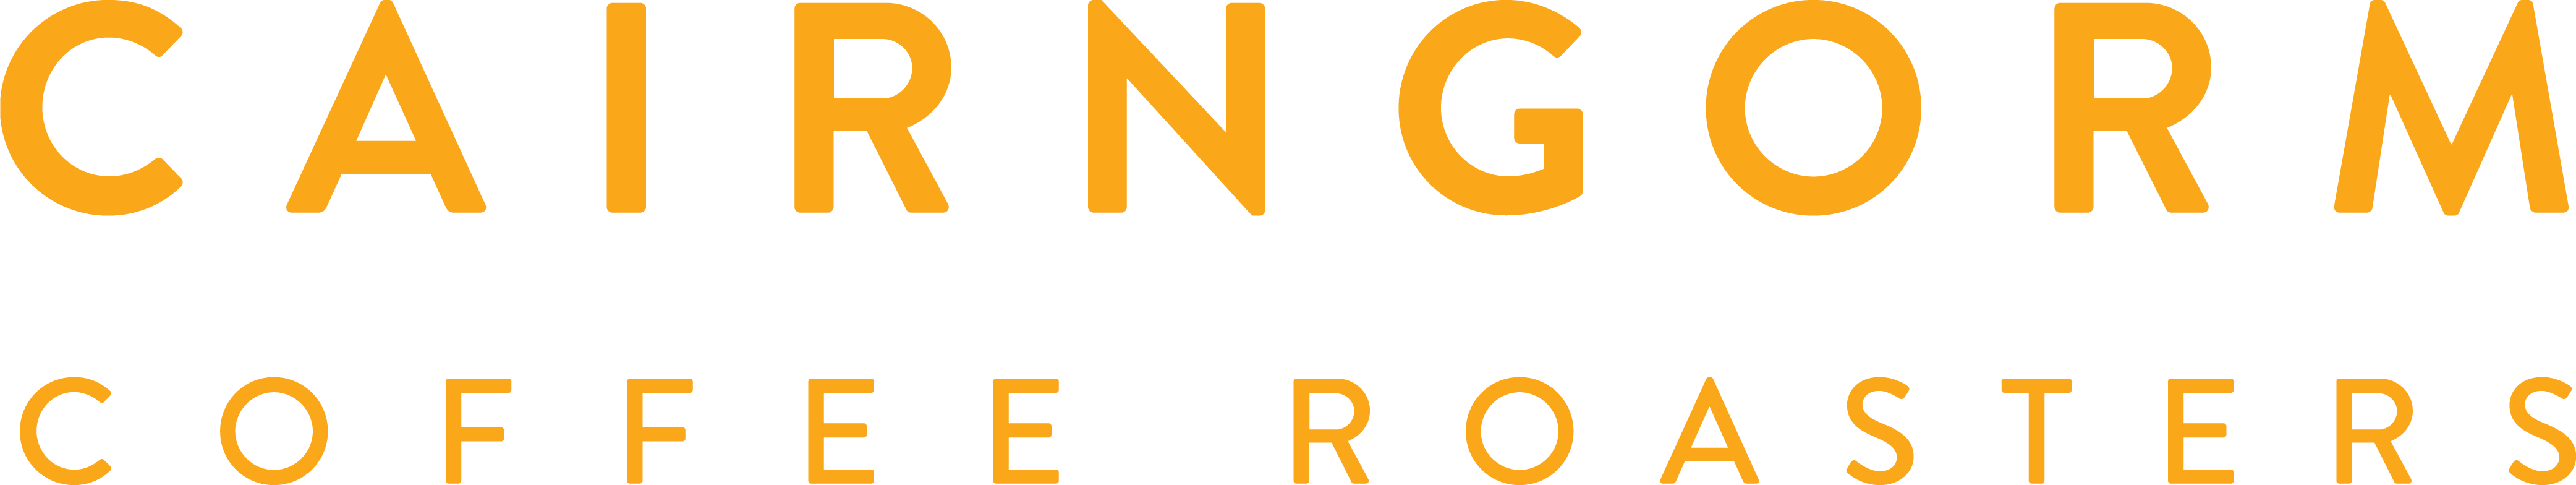 Cairngorm Coffee Logo